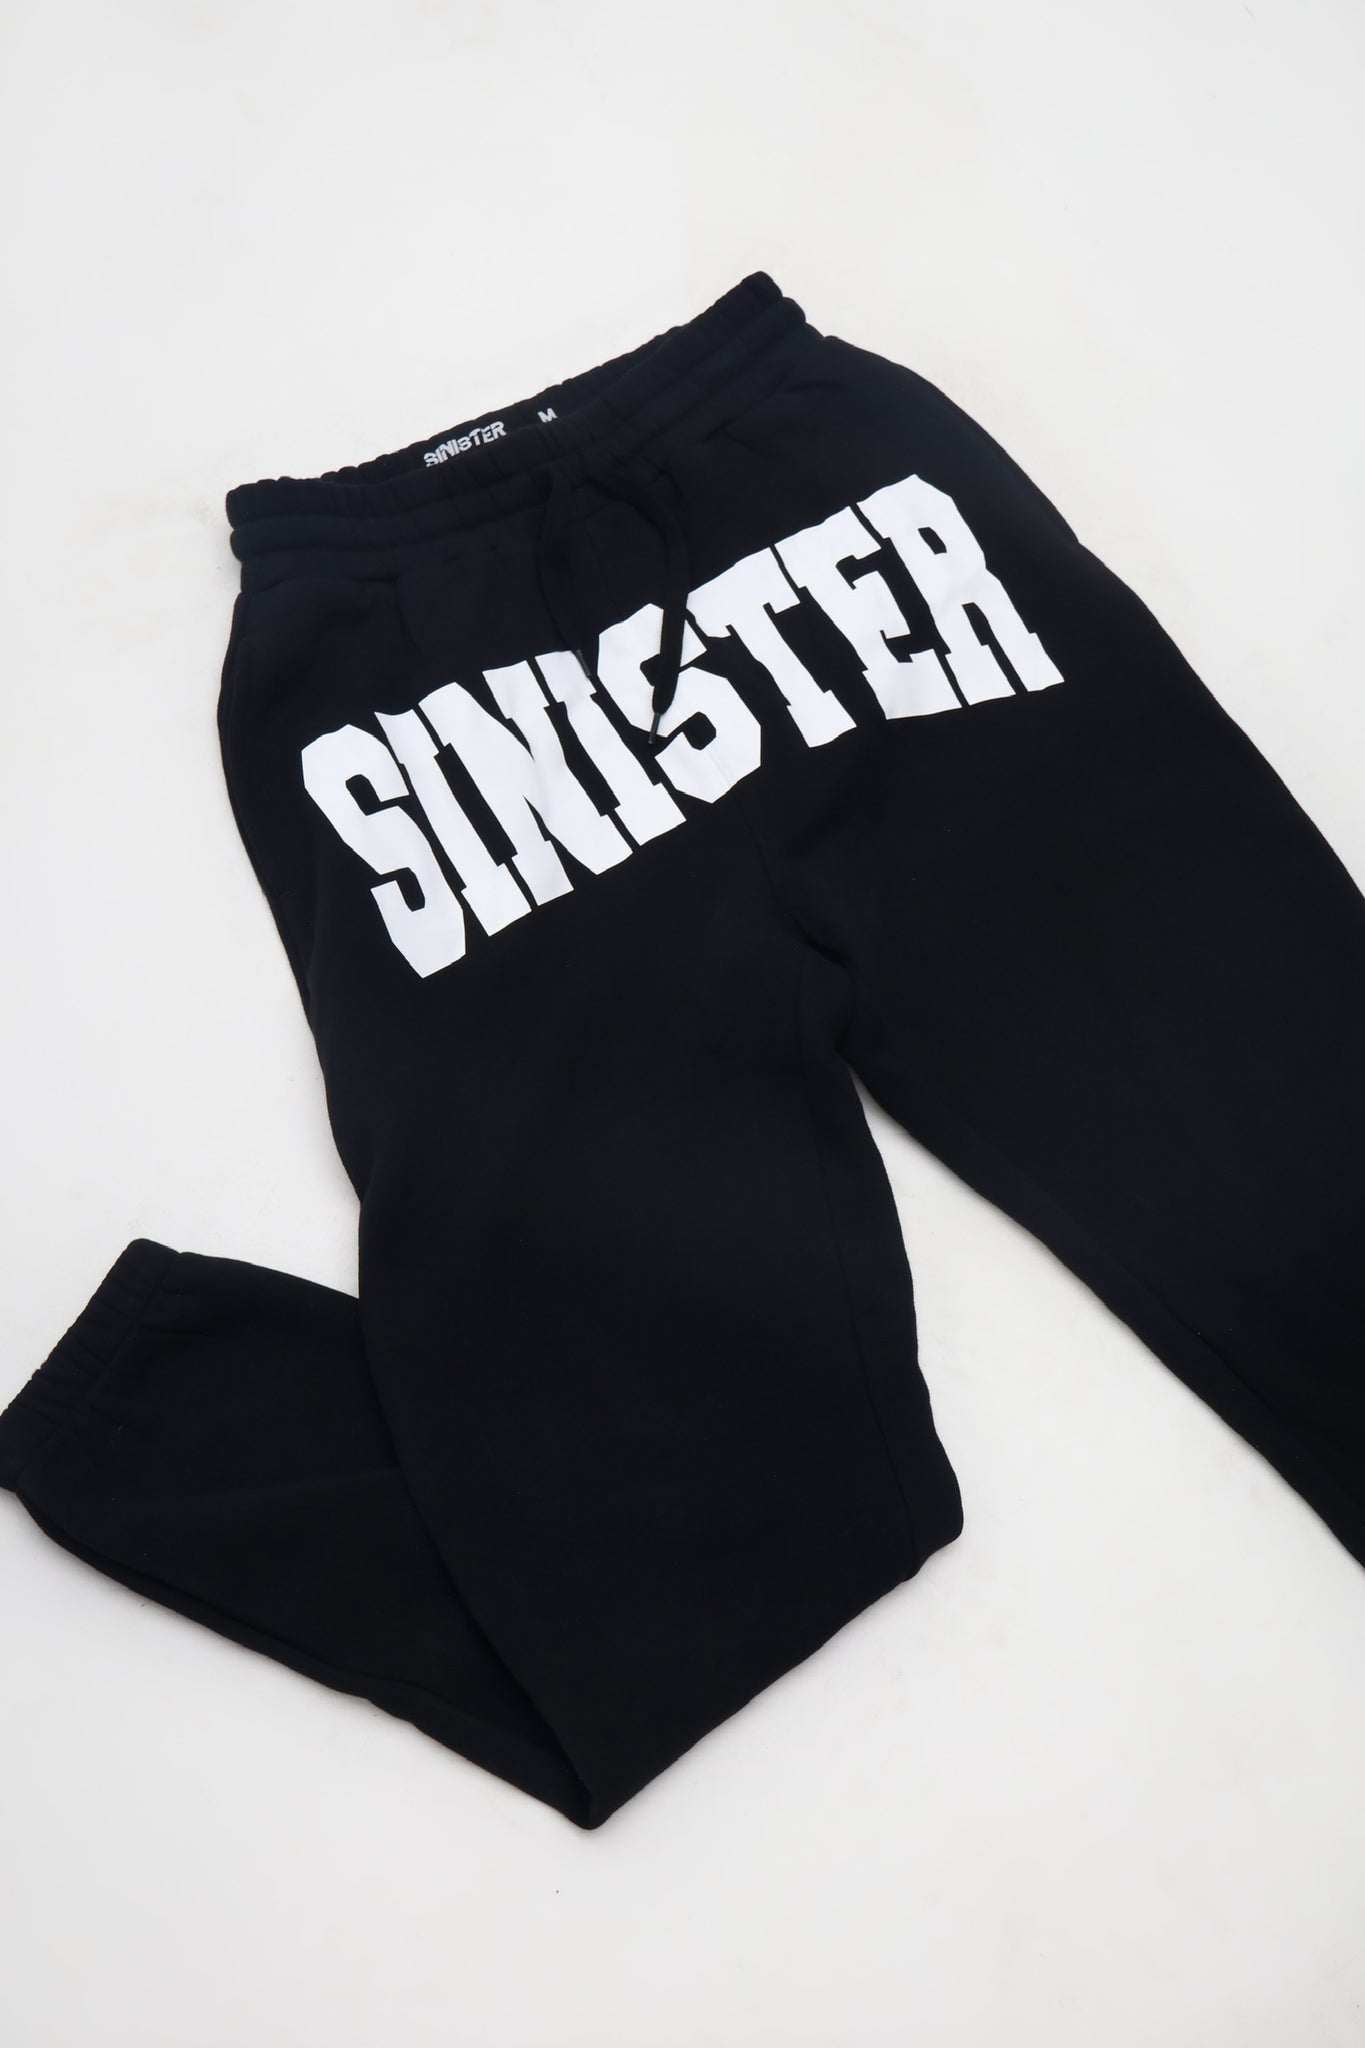 Sinist3r Brand Shirt Men's Large Black Crew Neck Sinister Sword Sheild Band  Tee